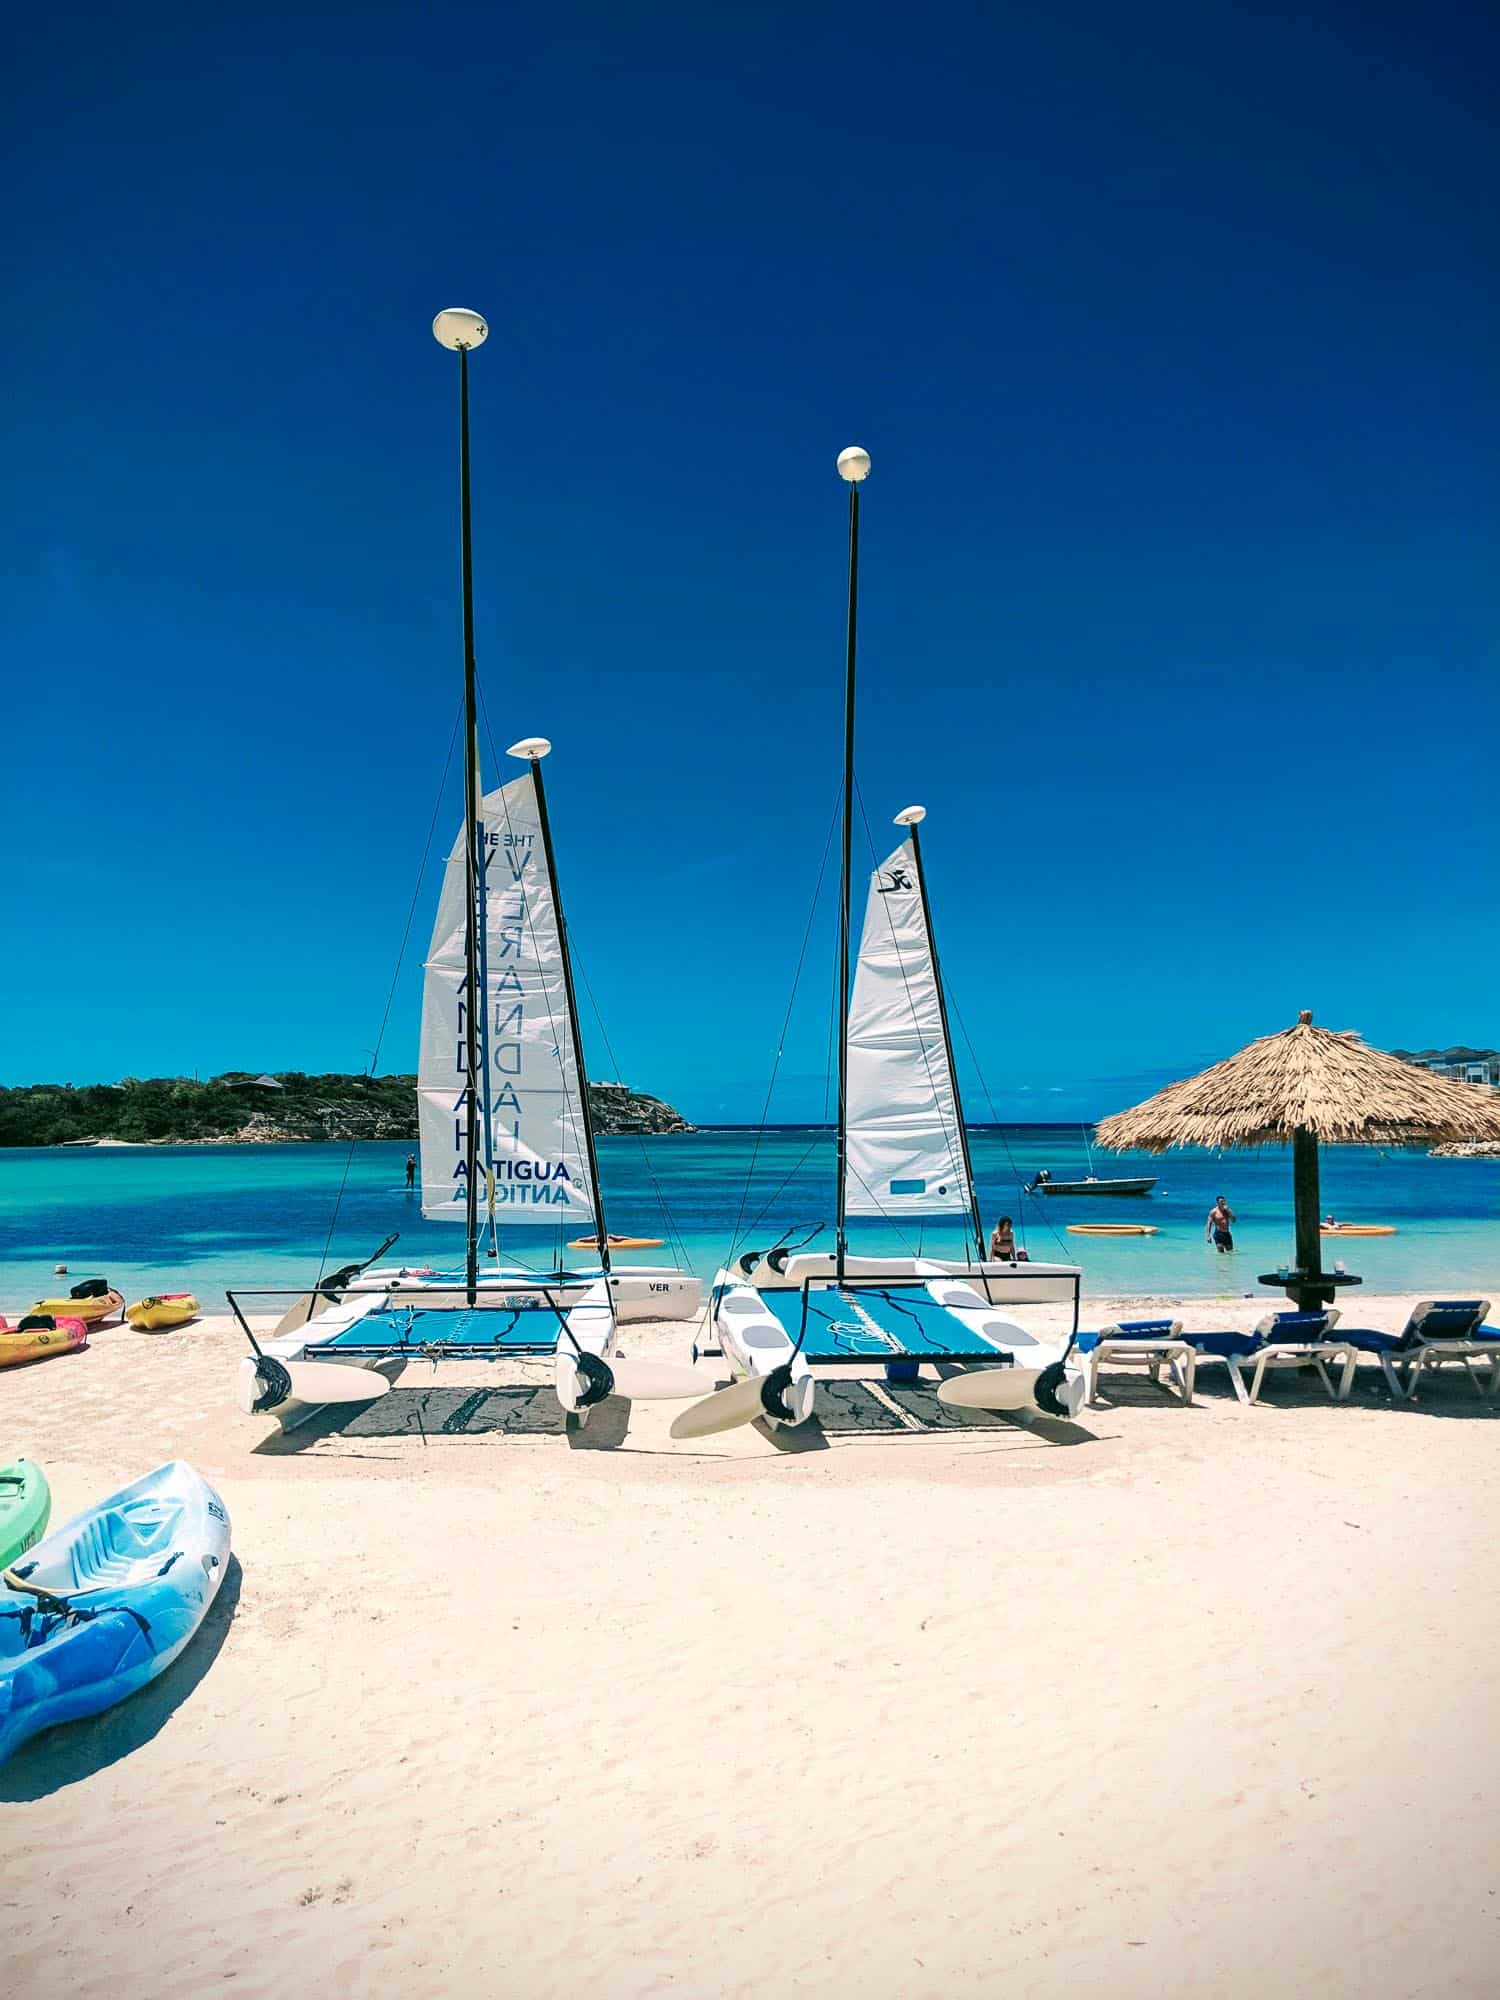 Verandah Bay resort beach on Antigua Island with mini catamarans